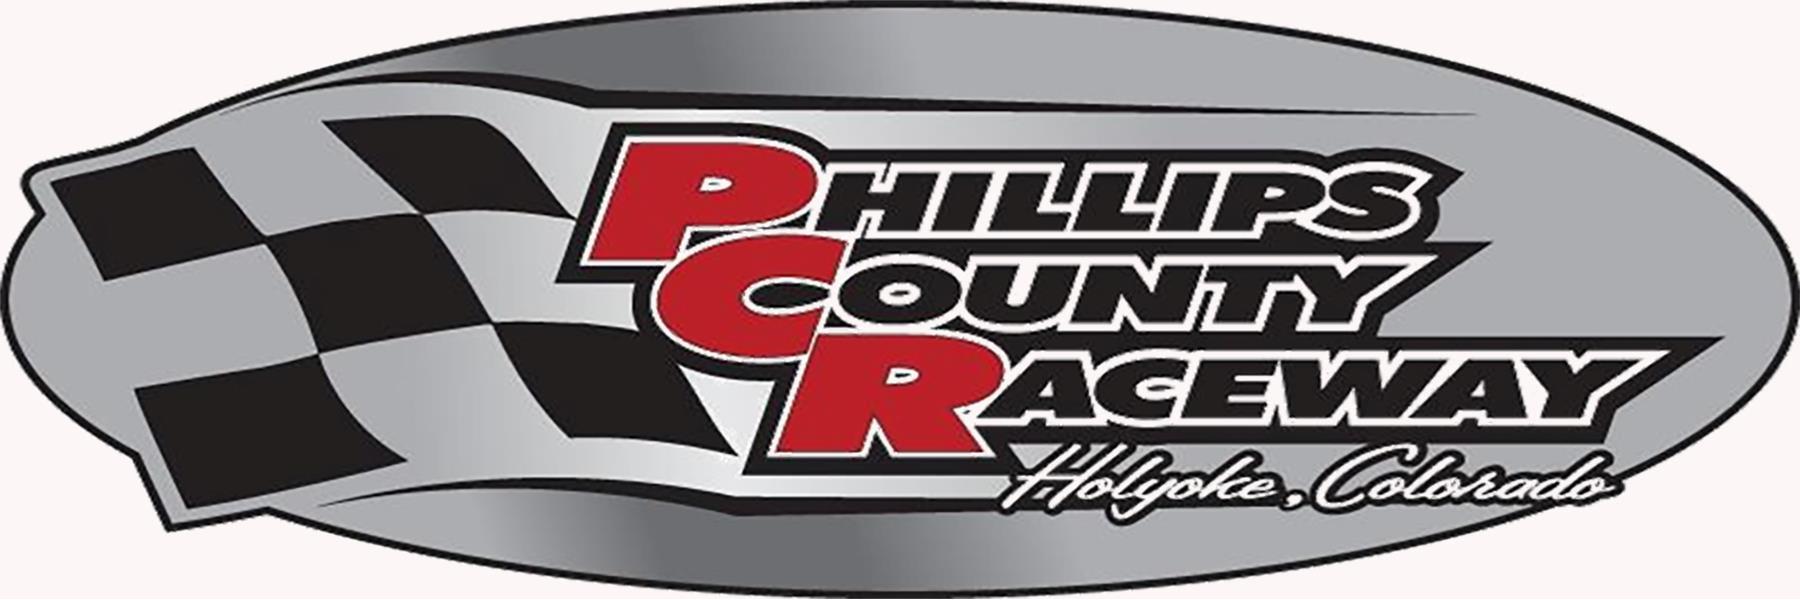 5/29/2022 - Phillips County Raceway